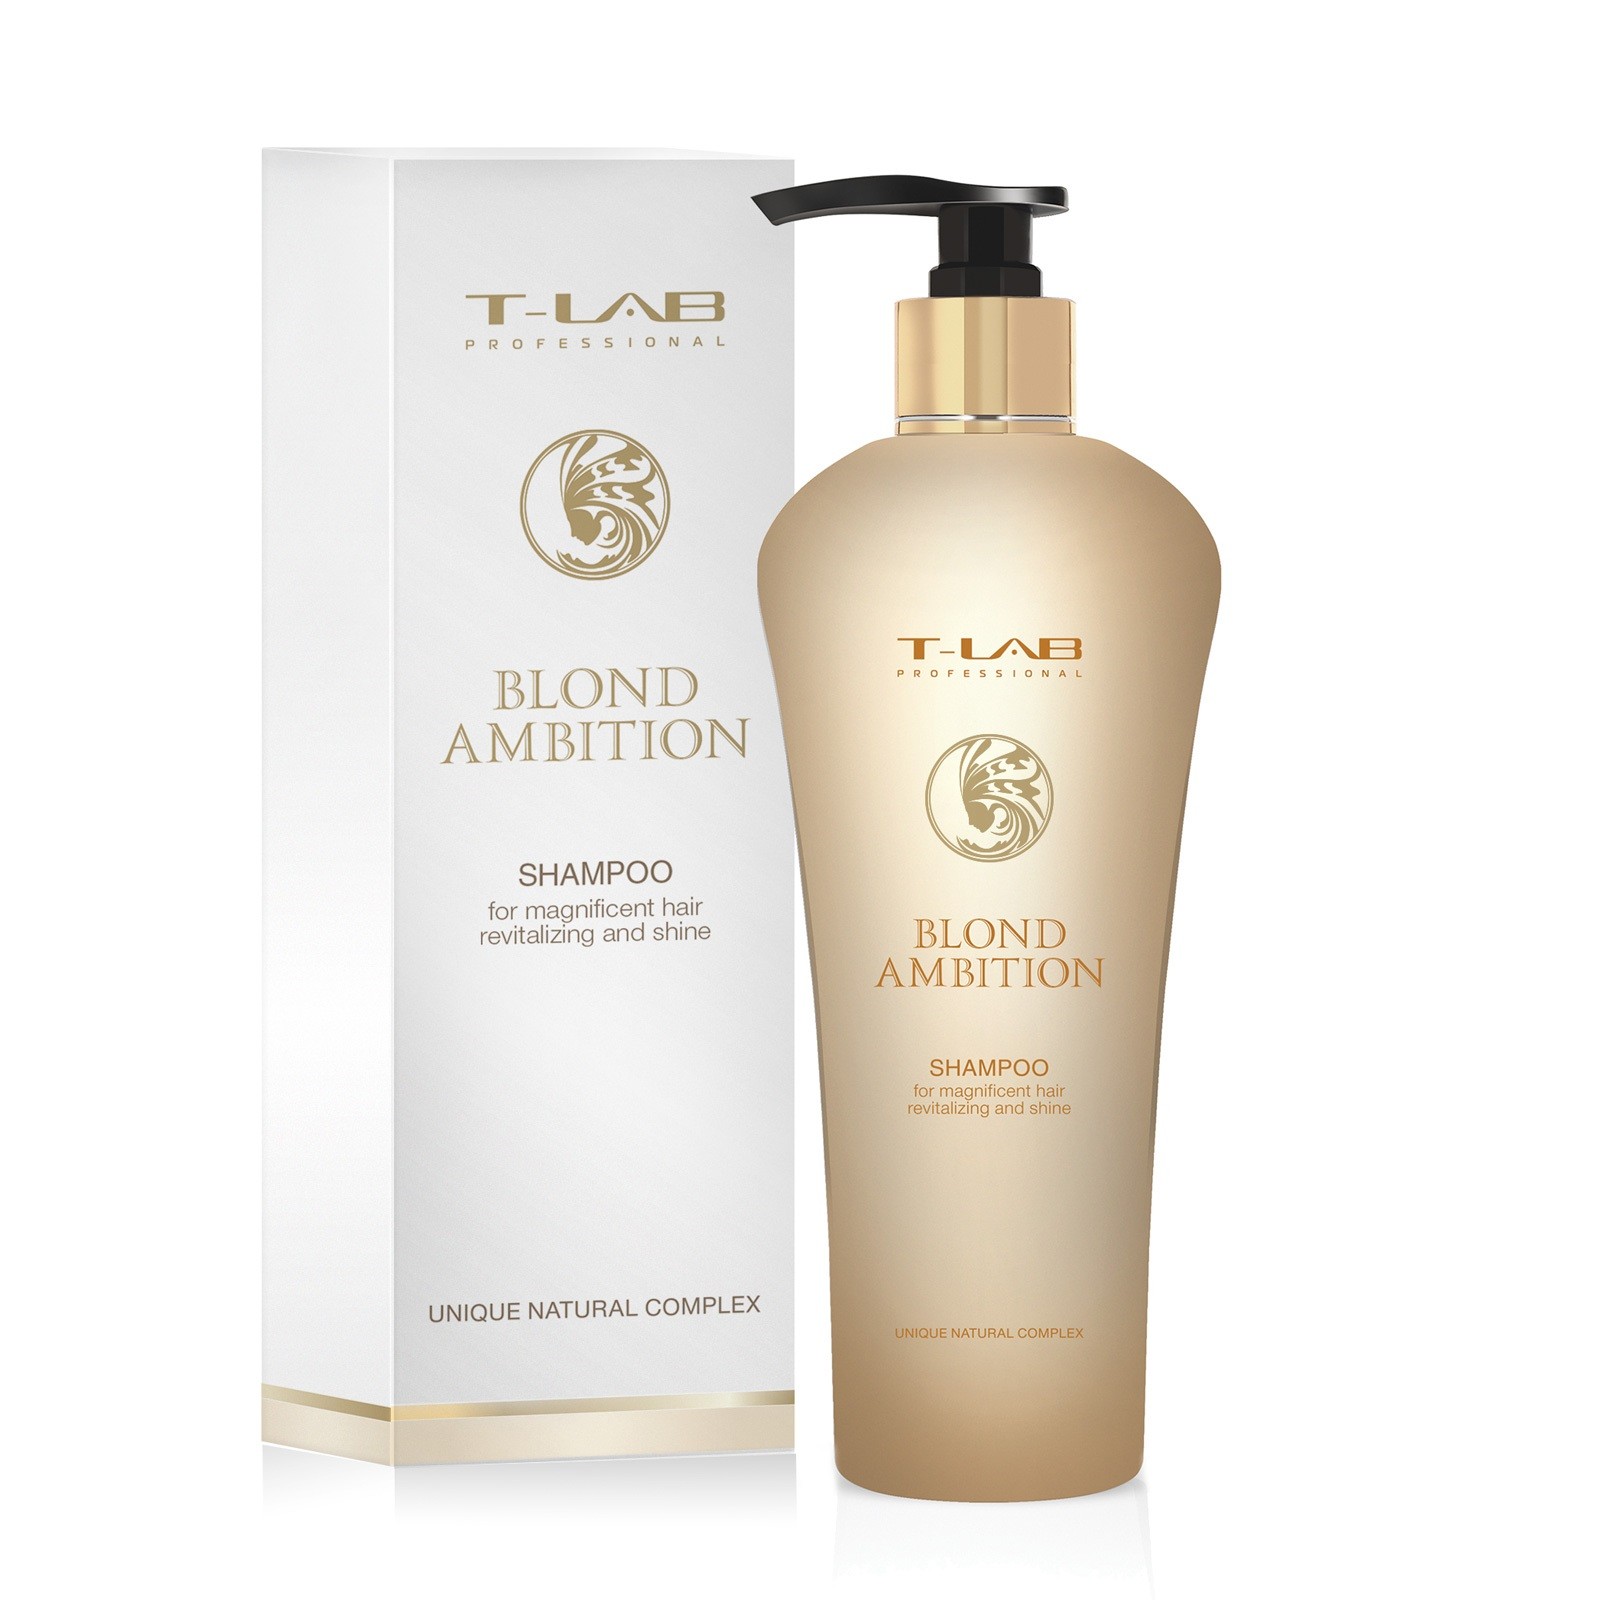 T-LAB Professional Blond Ambition Shampoo 250ml